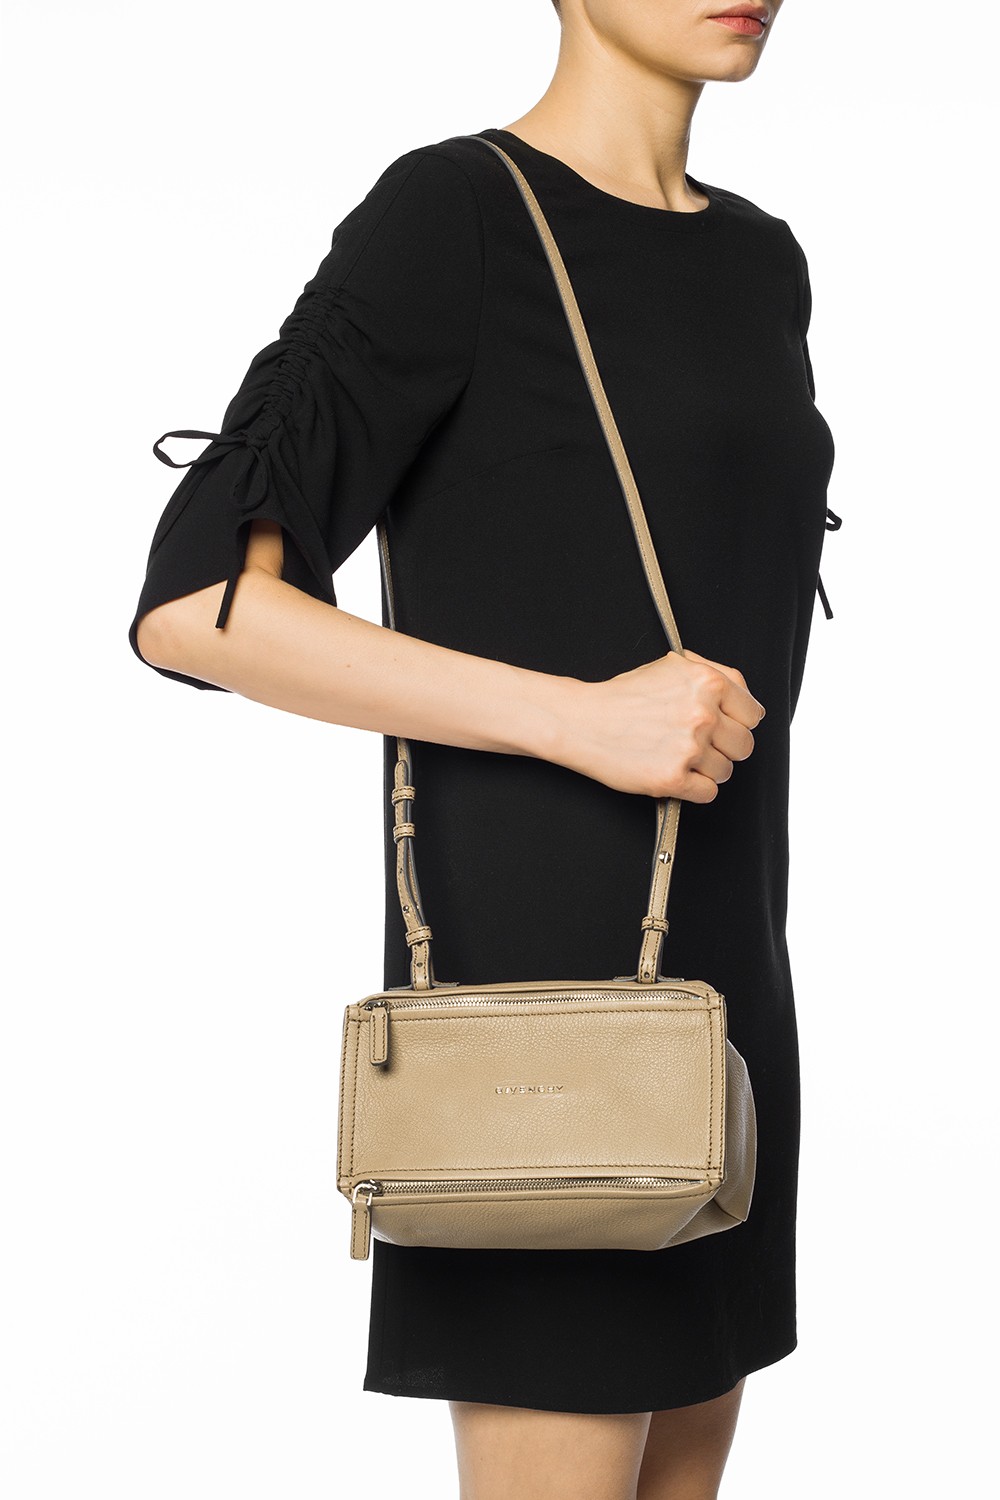 Givenchy 'Pandora Mini' Shoulder Bag